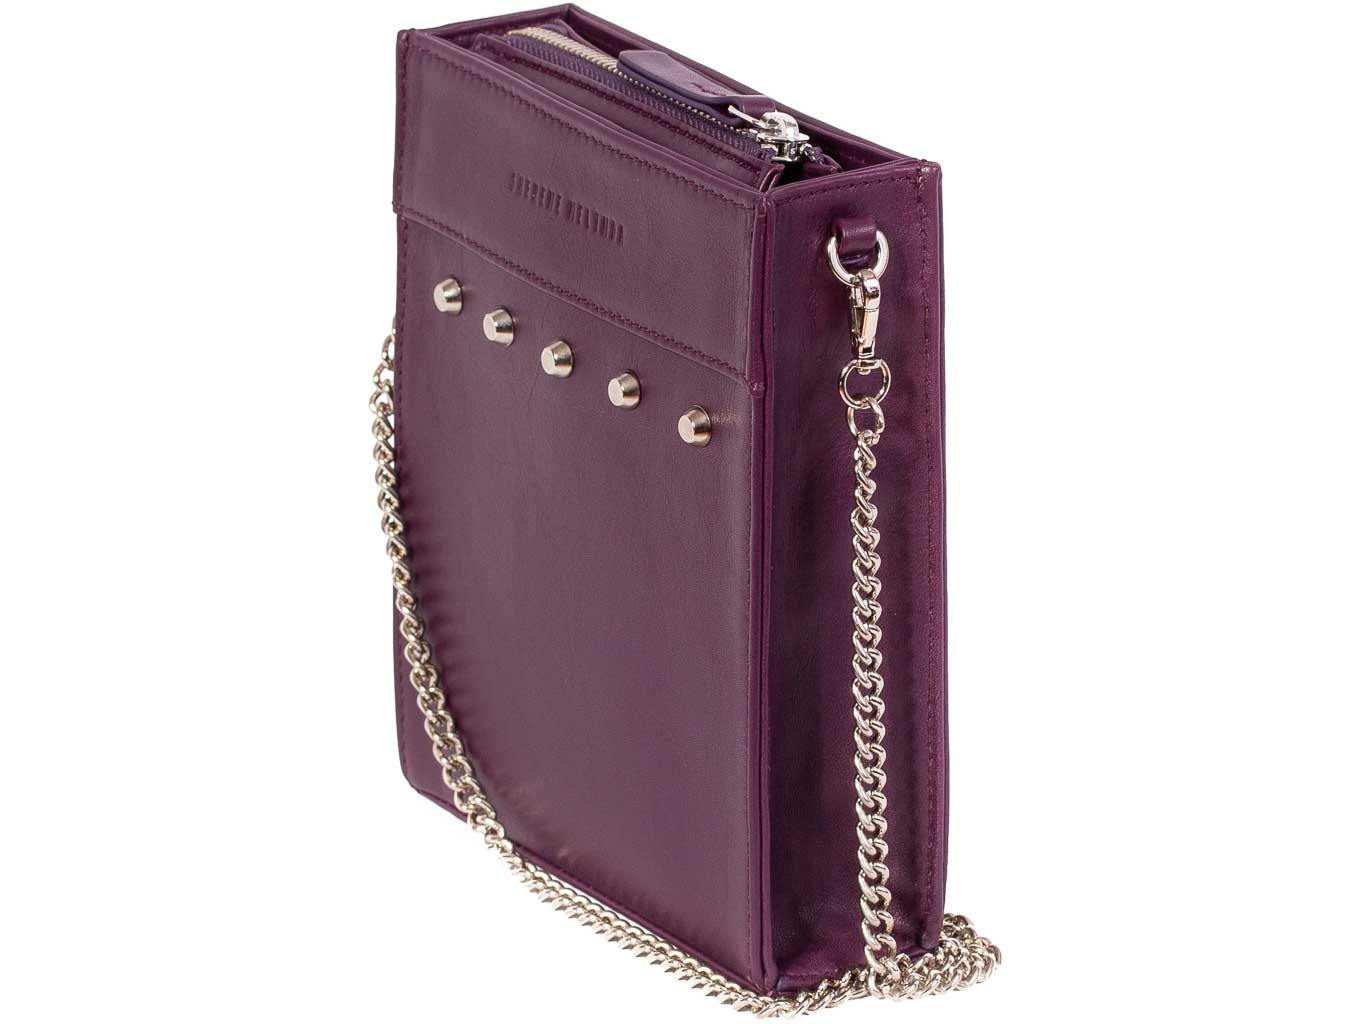 Messenger Studded Handbag in Deep Purple by Sherene Melinda side angle strap